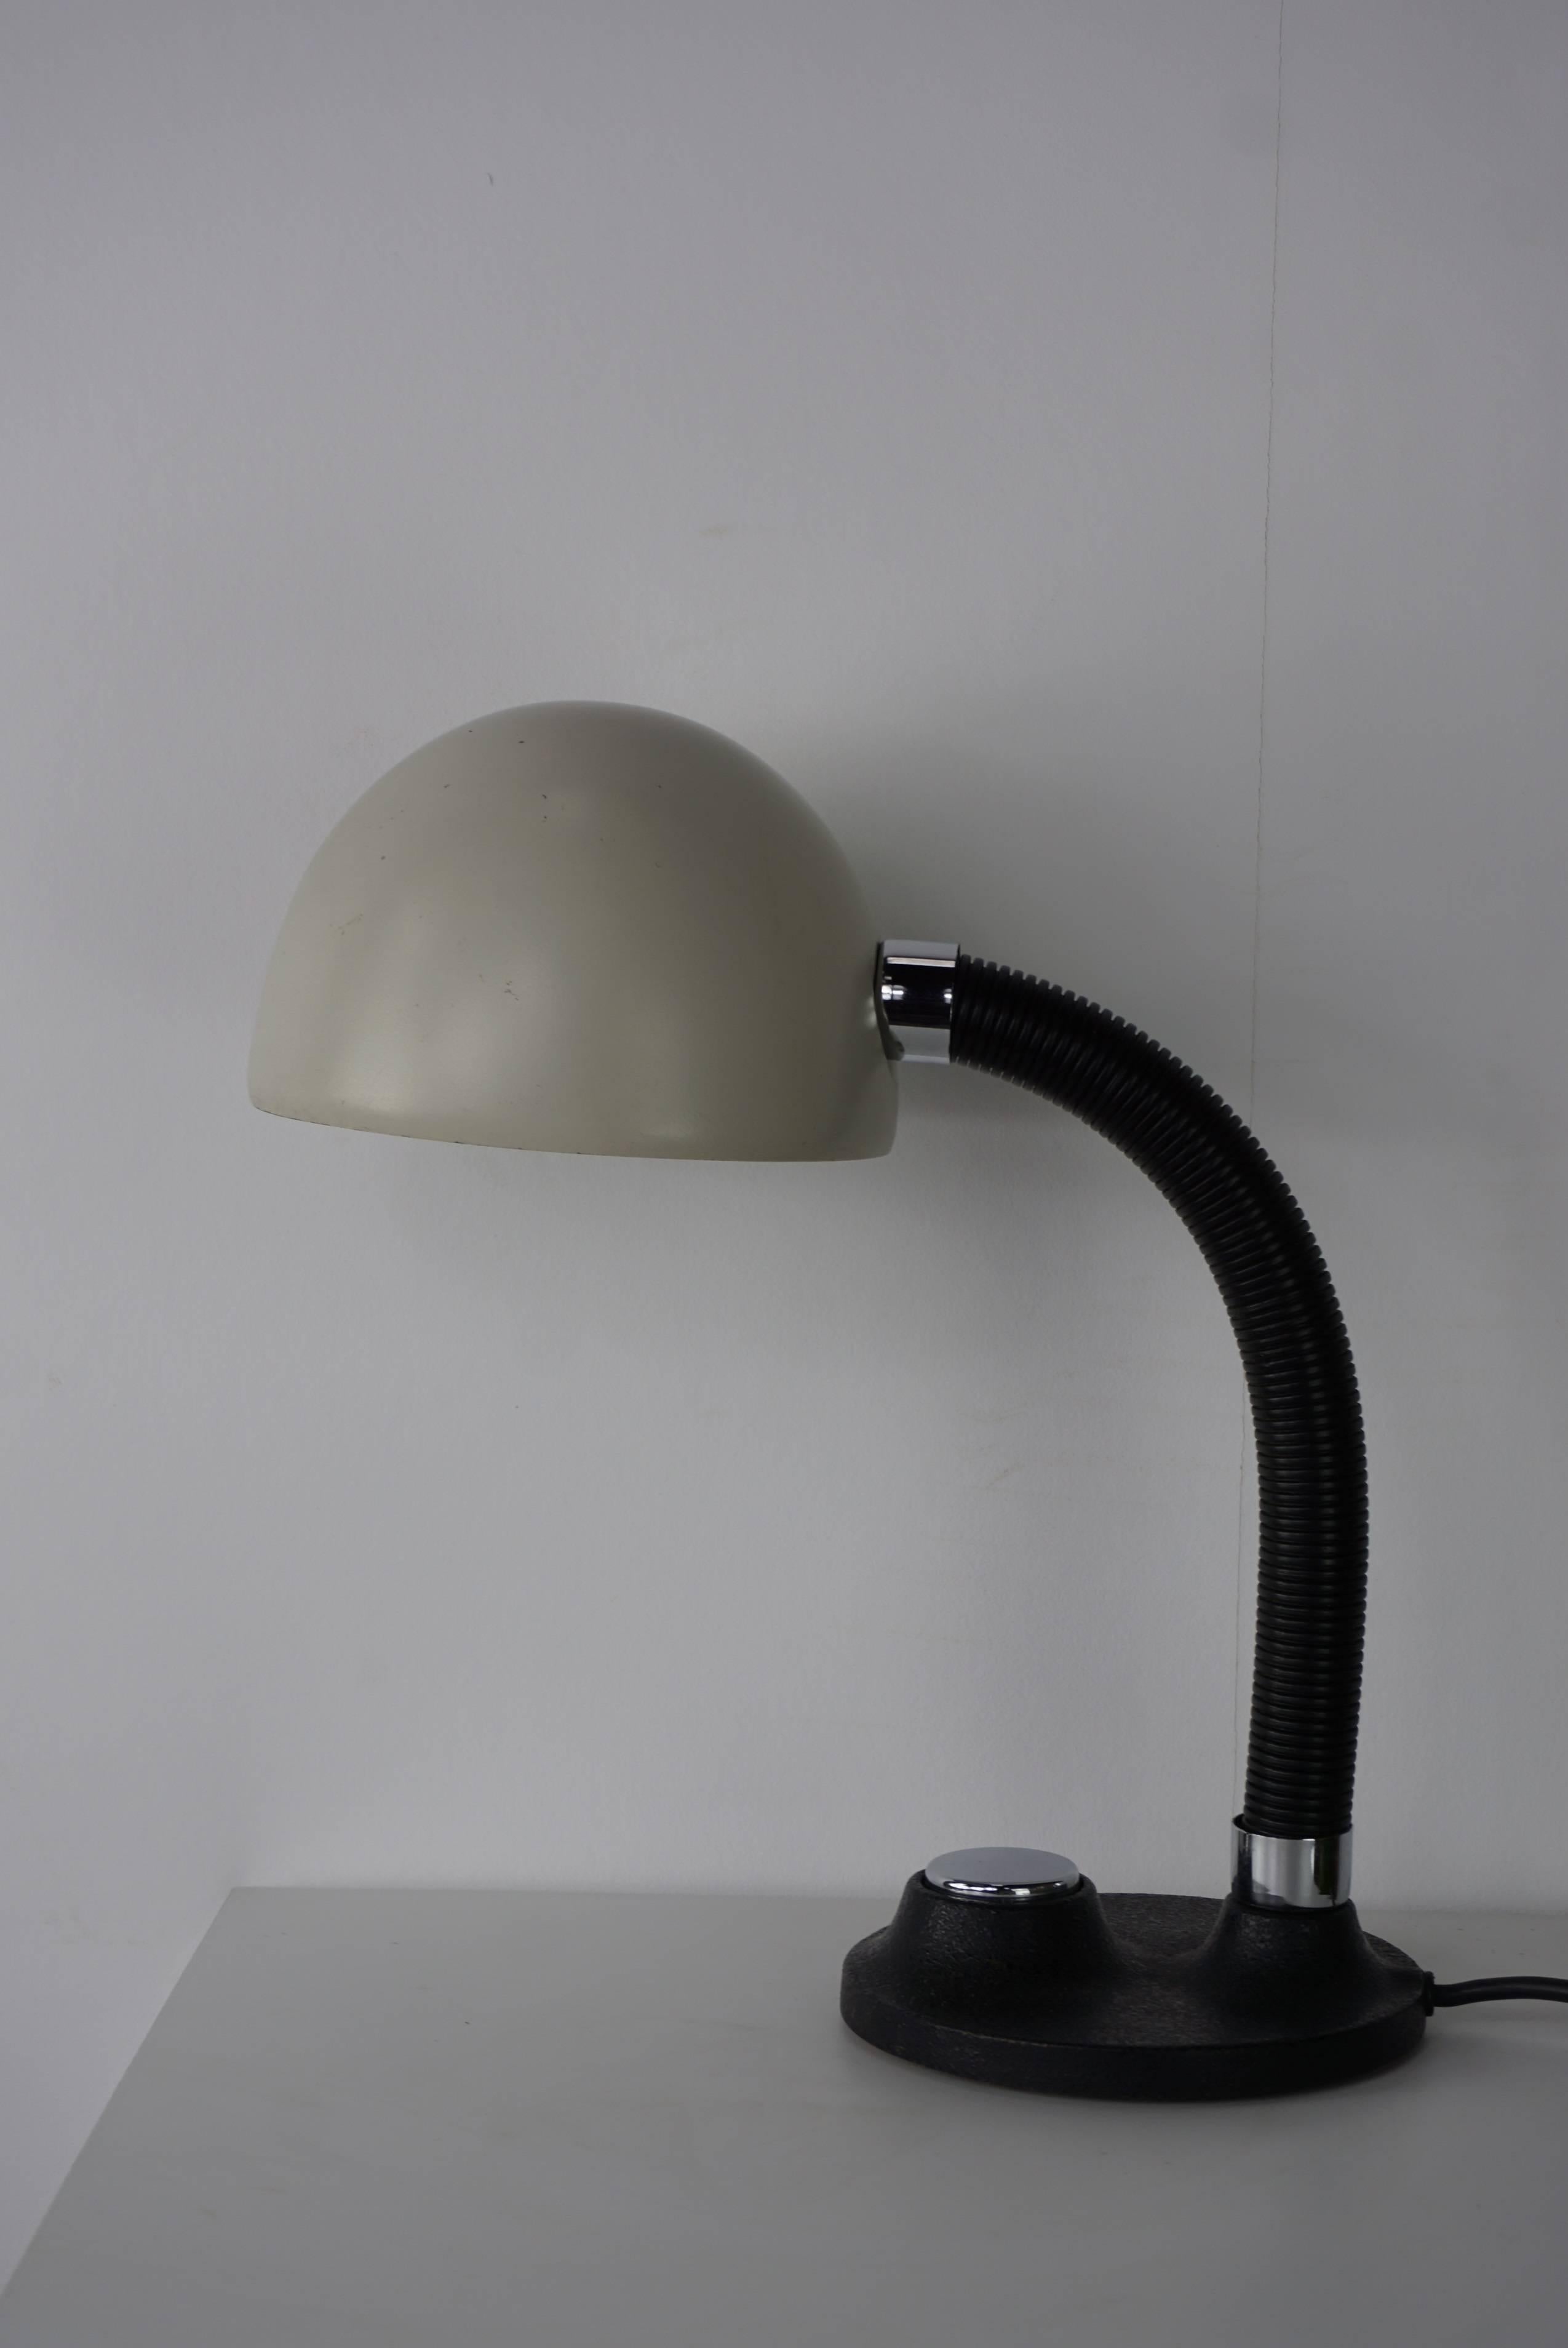 European Bauhaus and Industrial Design Lamp by Hillebrand